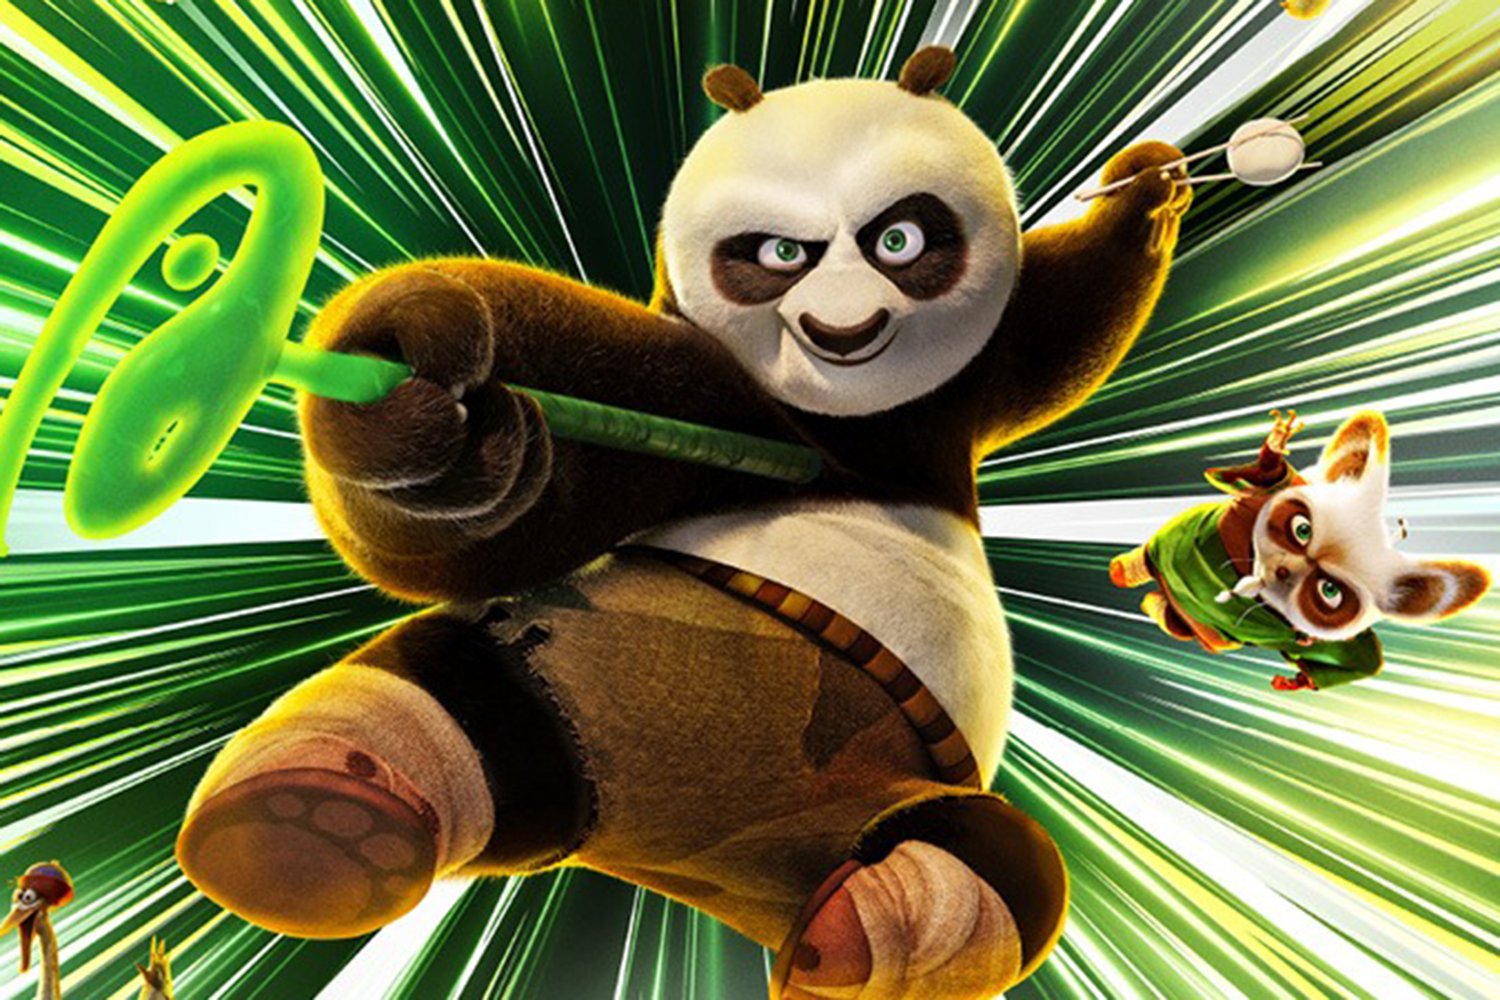 Watch Movie Kungfu Panda 4 Full Movie Free Online Streaming Full HD